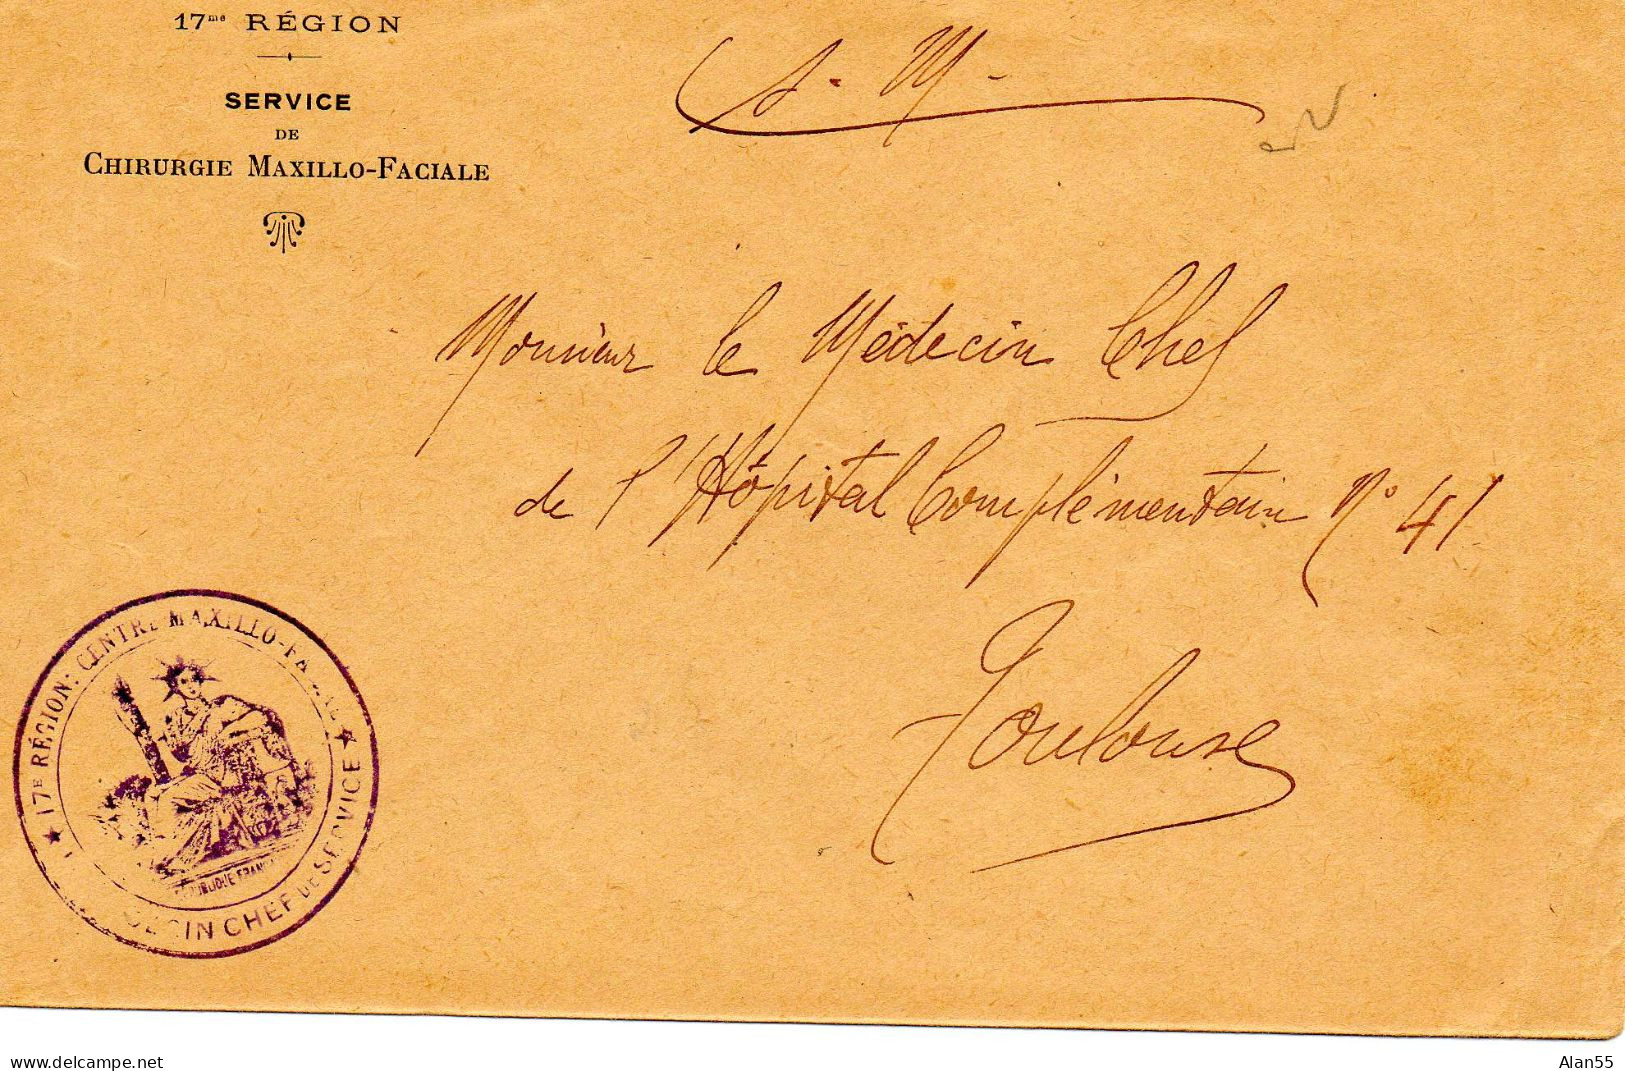 FRANCE.1915?.FM. "CENTRE MAXILLO FACIAL  /17e REGION" .TOULOUSE (HAUTE GARONNE) - 1. Weltkrieg